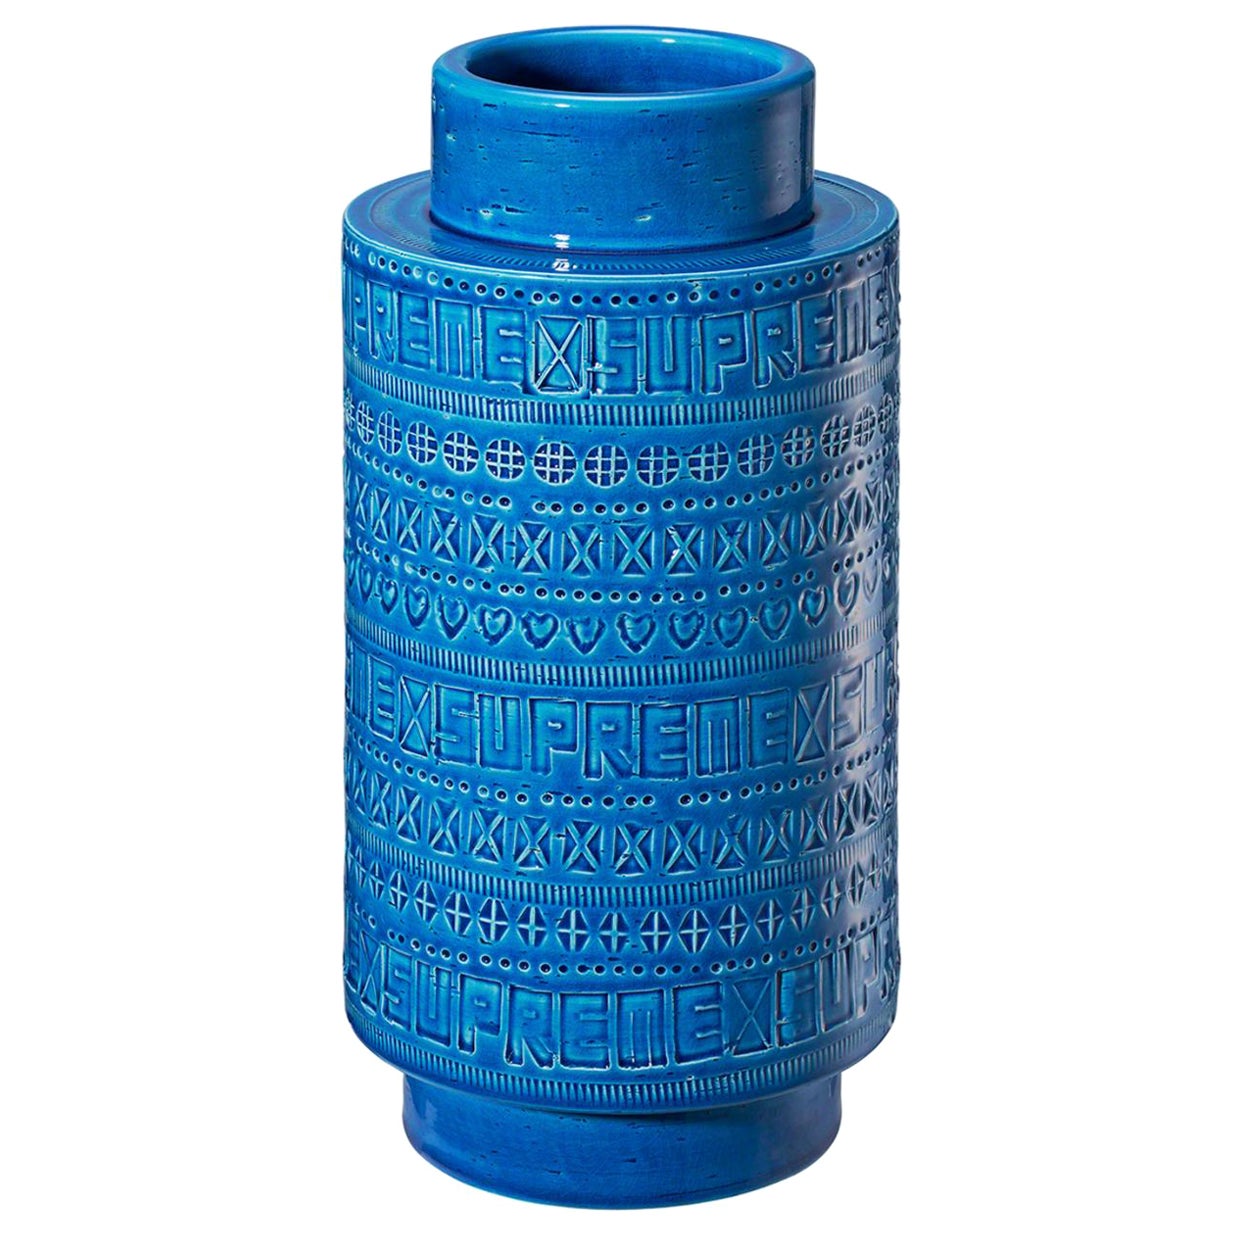 Supreme x Bitossi Spring 2023 Rimini Blu Vase, Limited Edition, Italy.